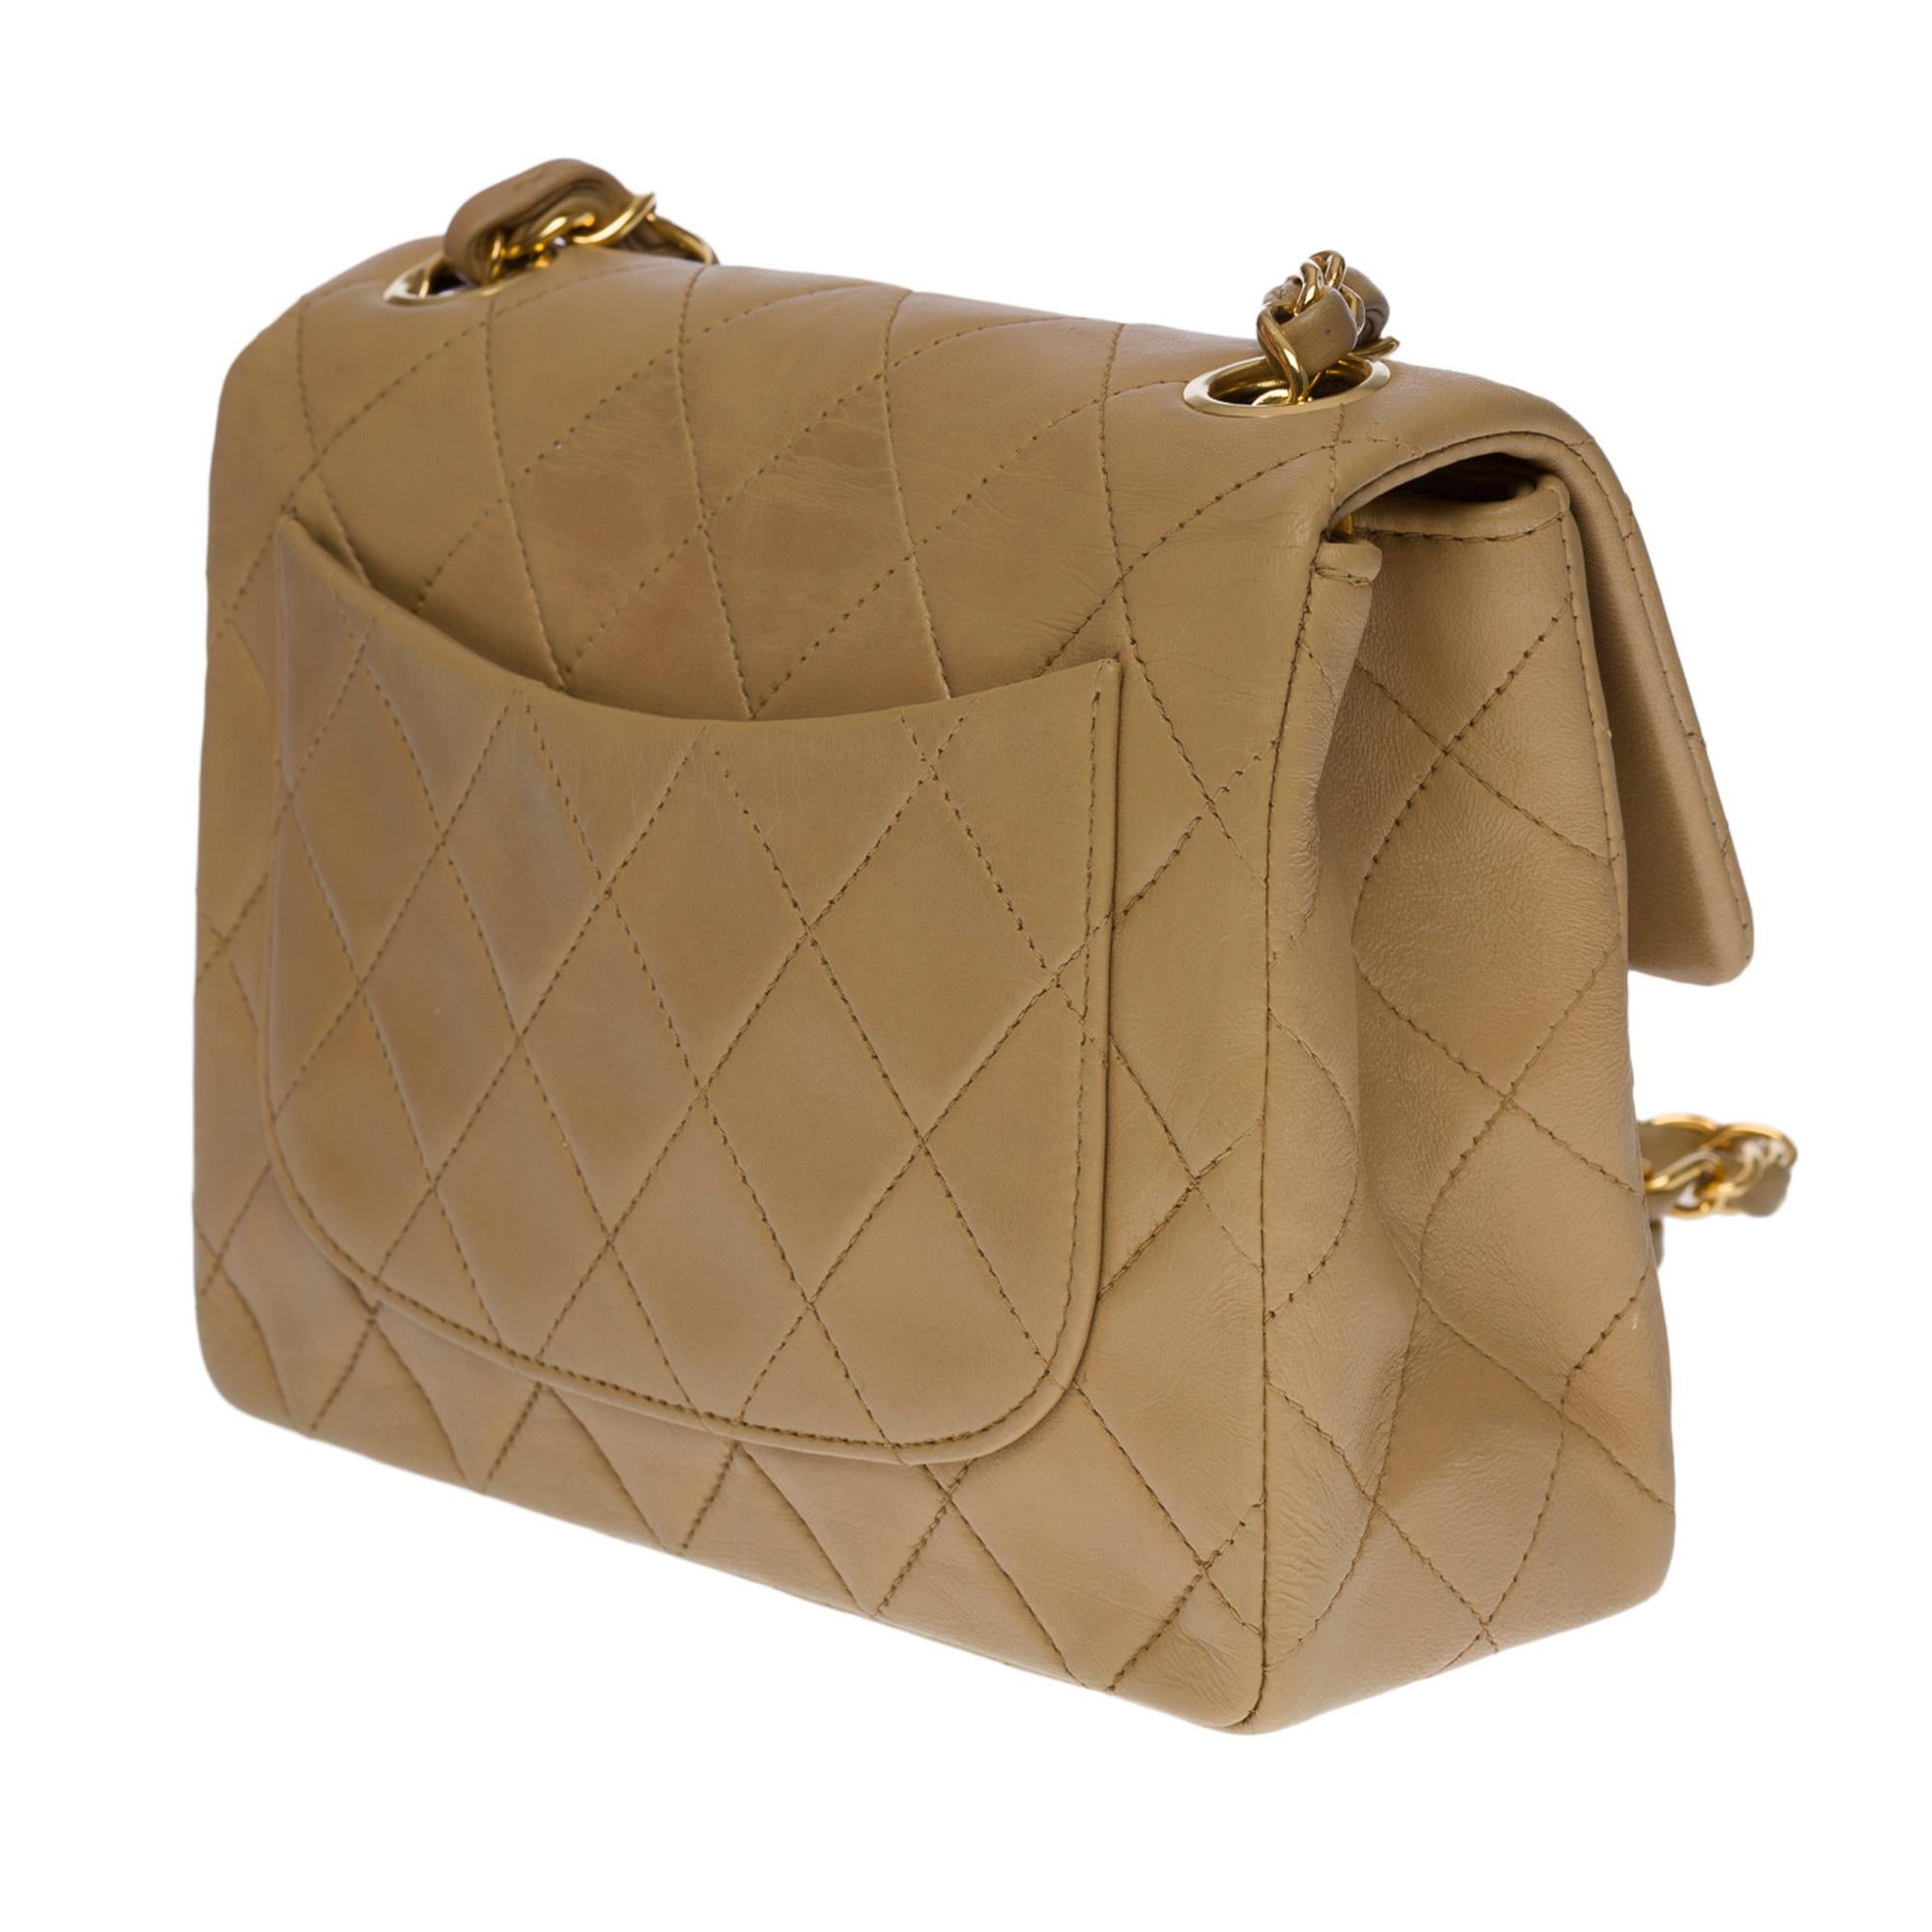 Splendid Chanel Timeless Mini Flap bag in beige quilted lambskin, GHW 1